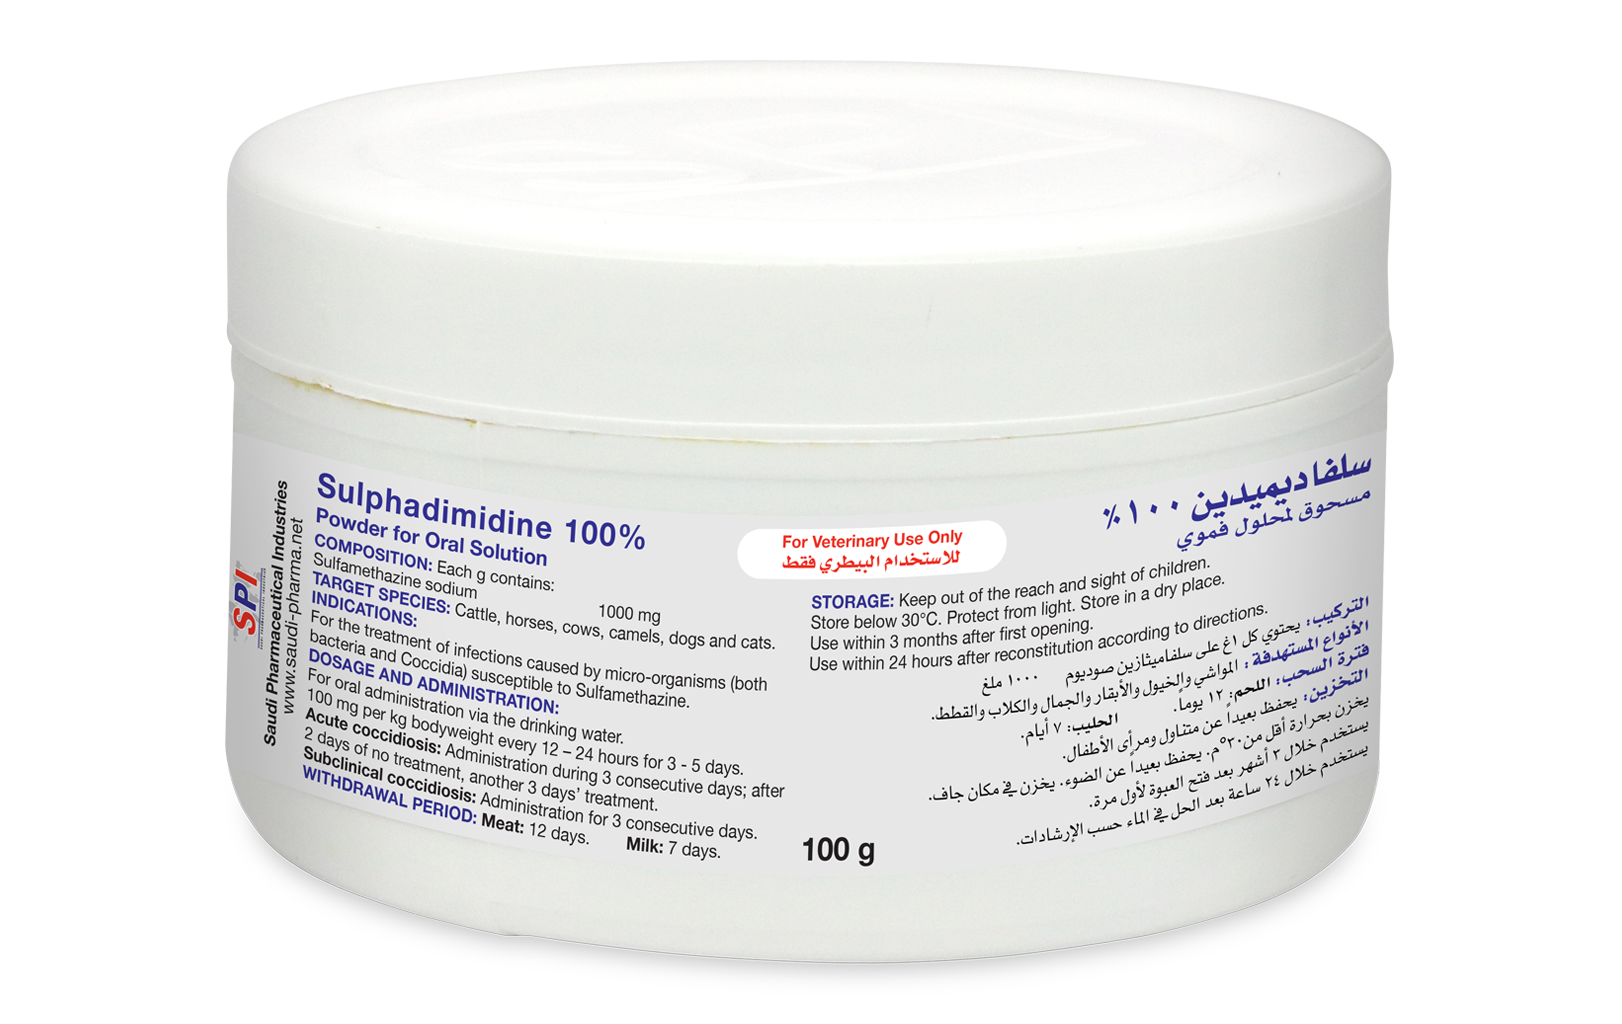 Sulphadimidine 100% Powder for Oral Solution (100 g)